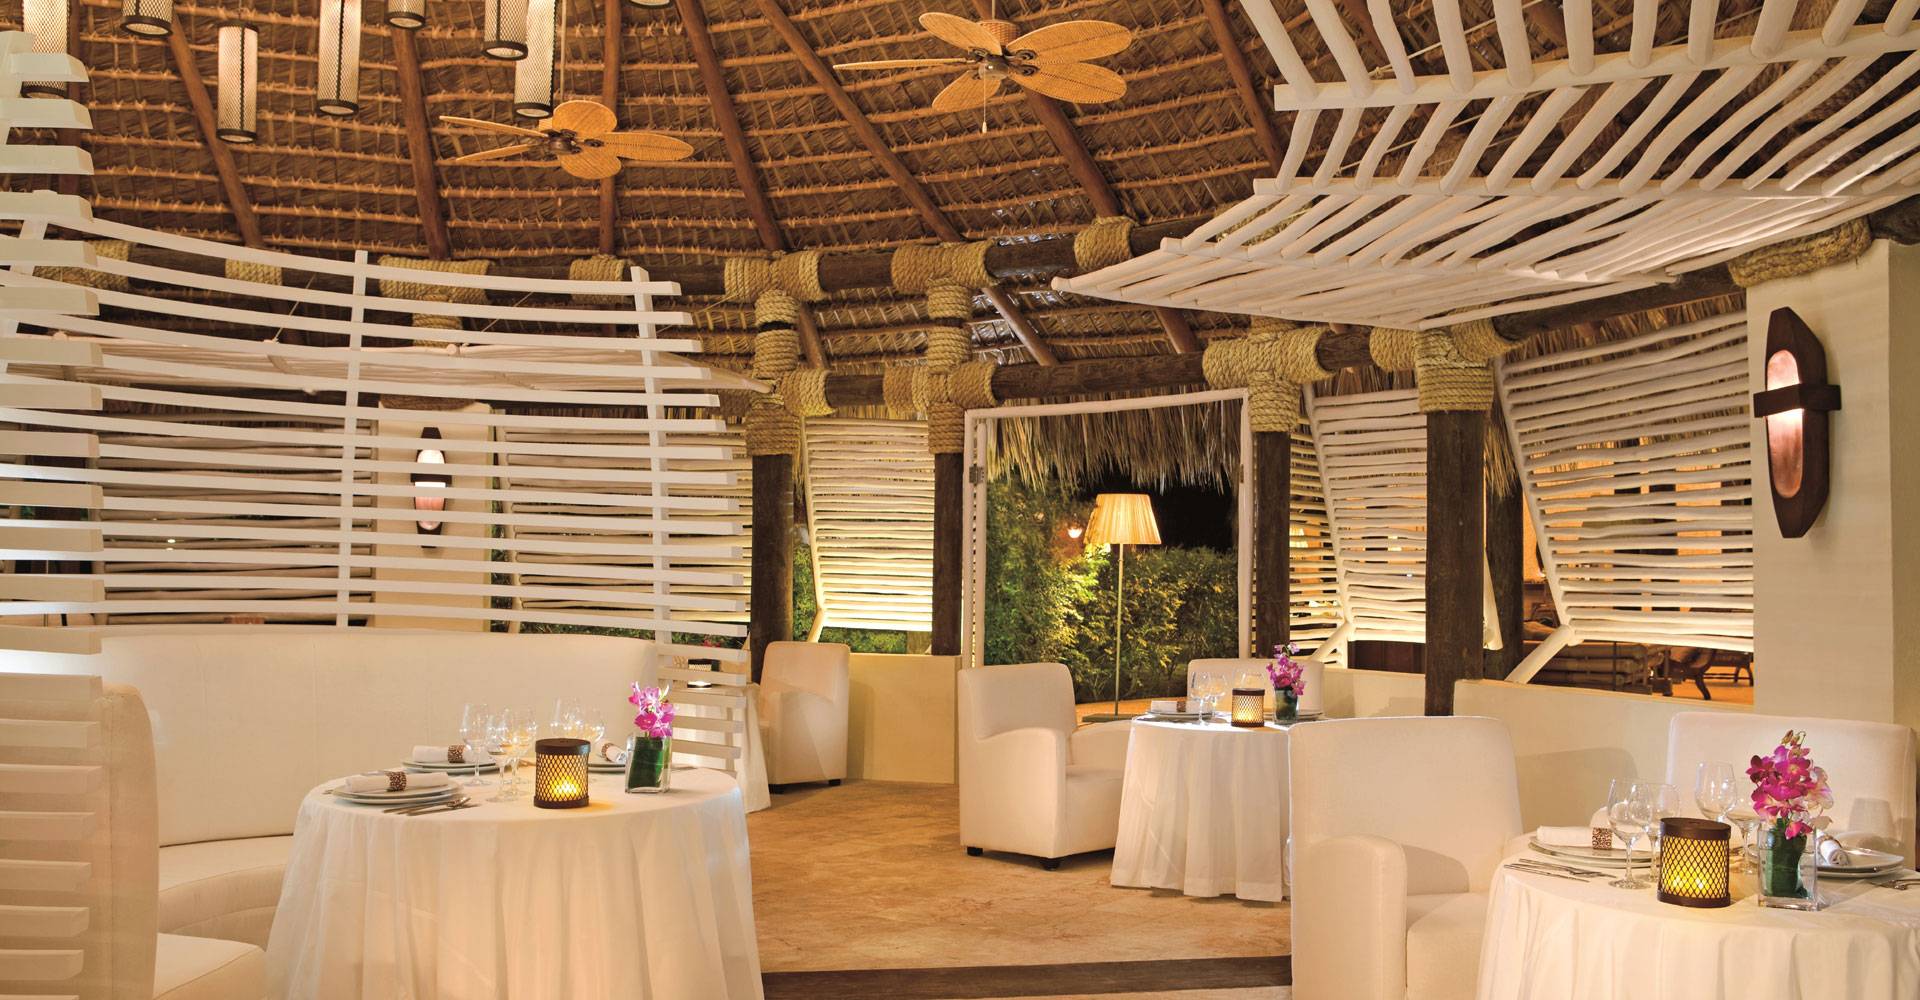 Dominikanische Republik, Hotel Zoetry Agua Punta Cana, A la Card Restaurant, Latin America Tours